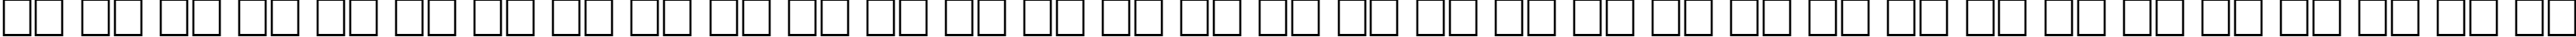 Пример написания русского алфавита шрифтом ChocolateBox